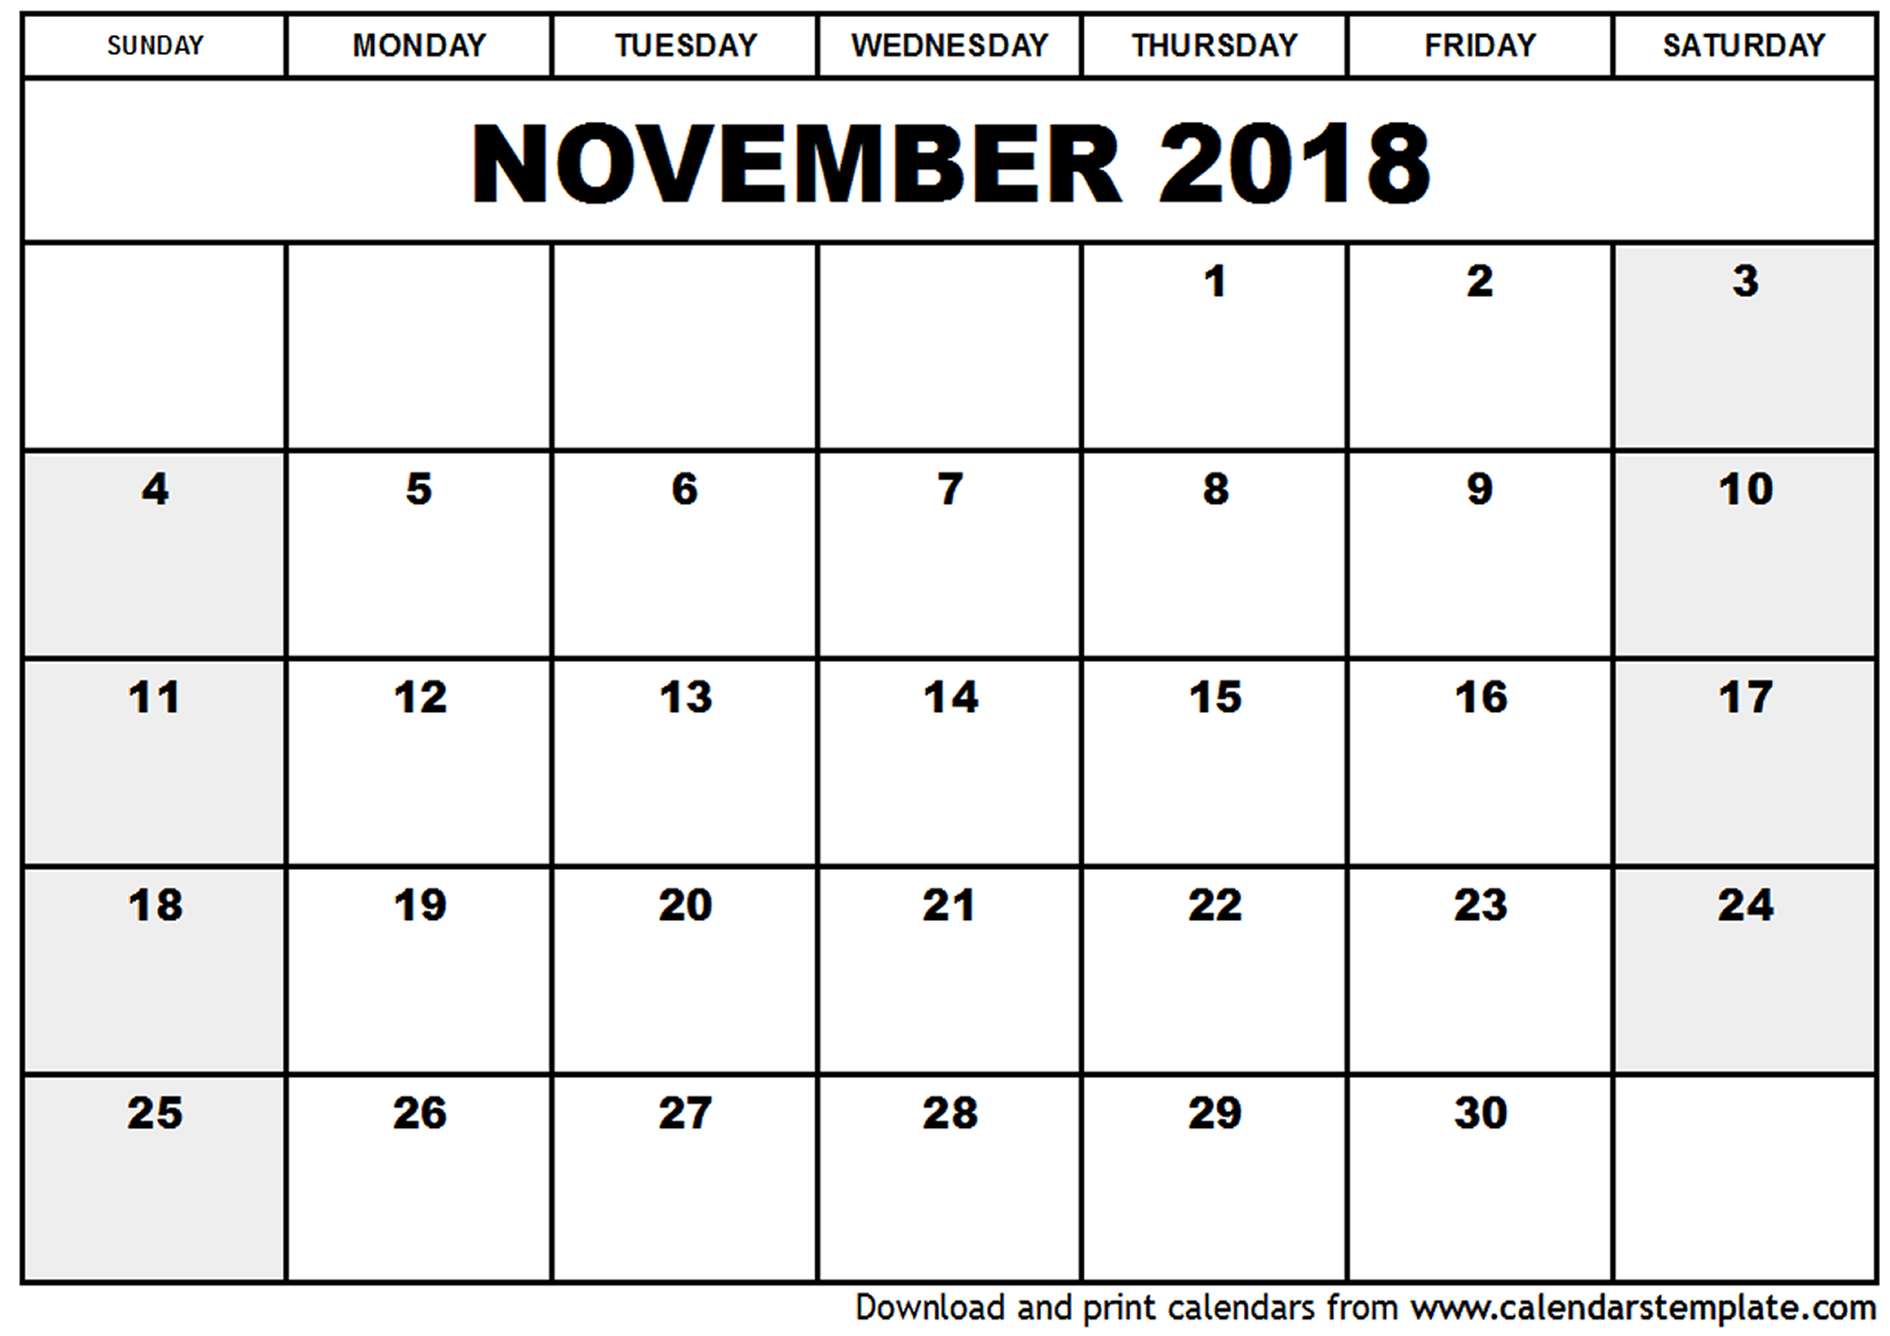 November 2018 Calendar Template